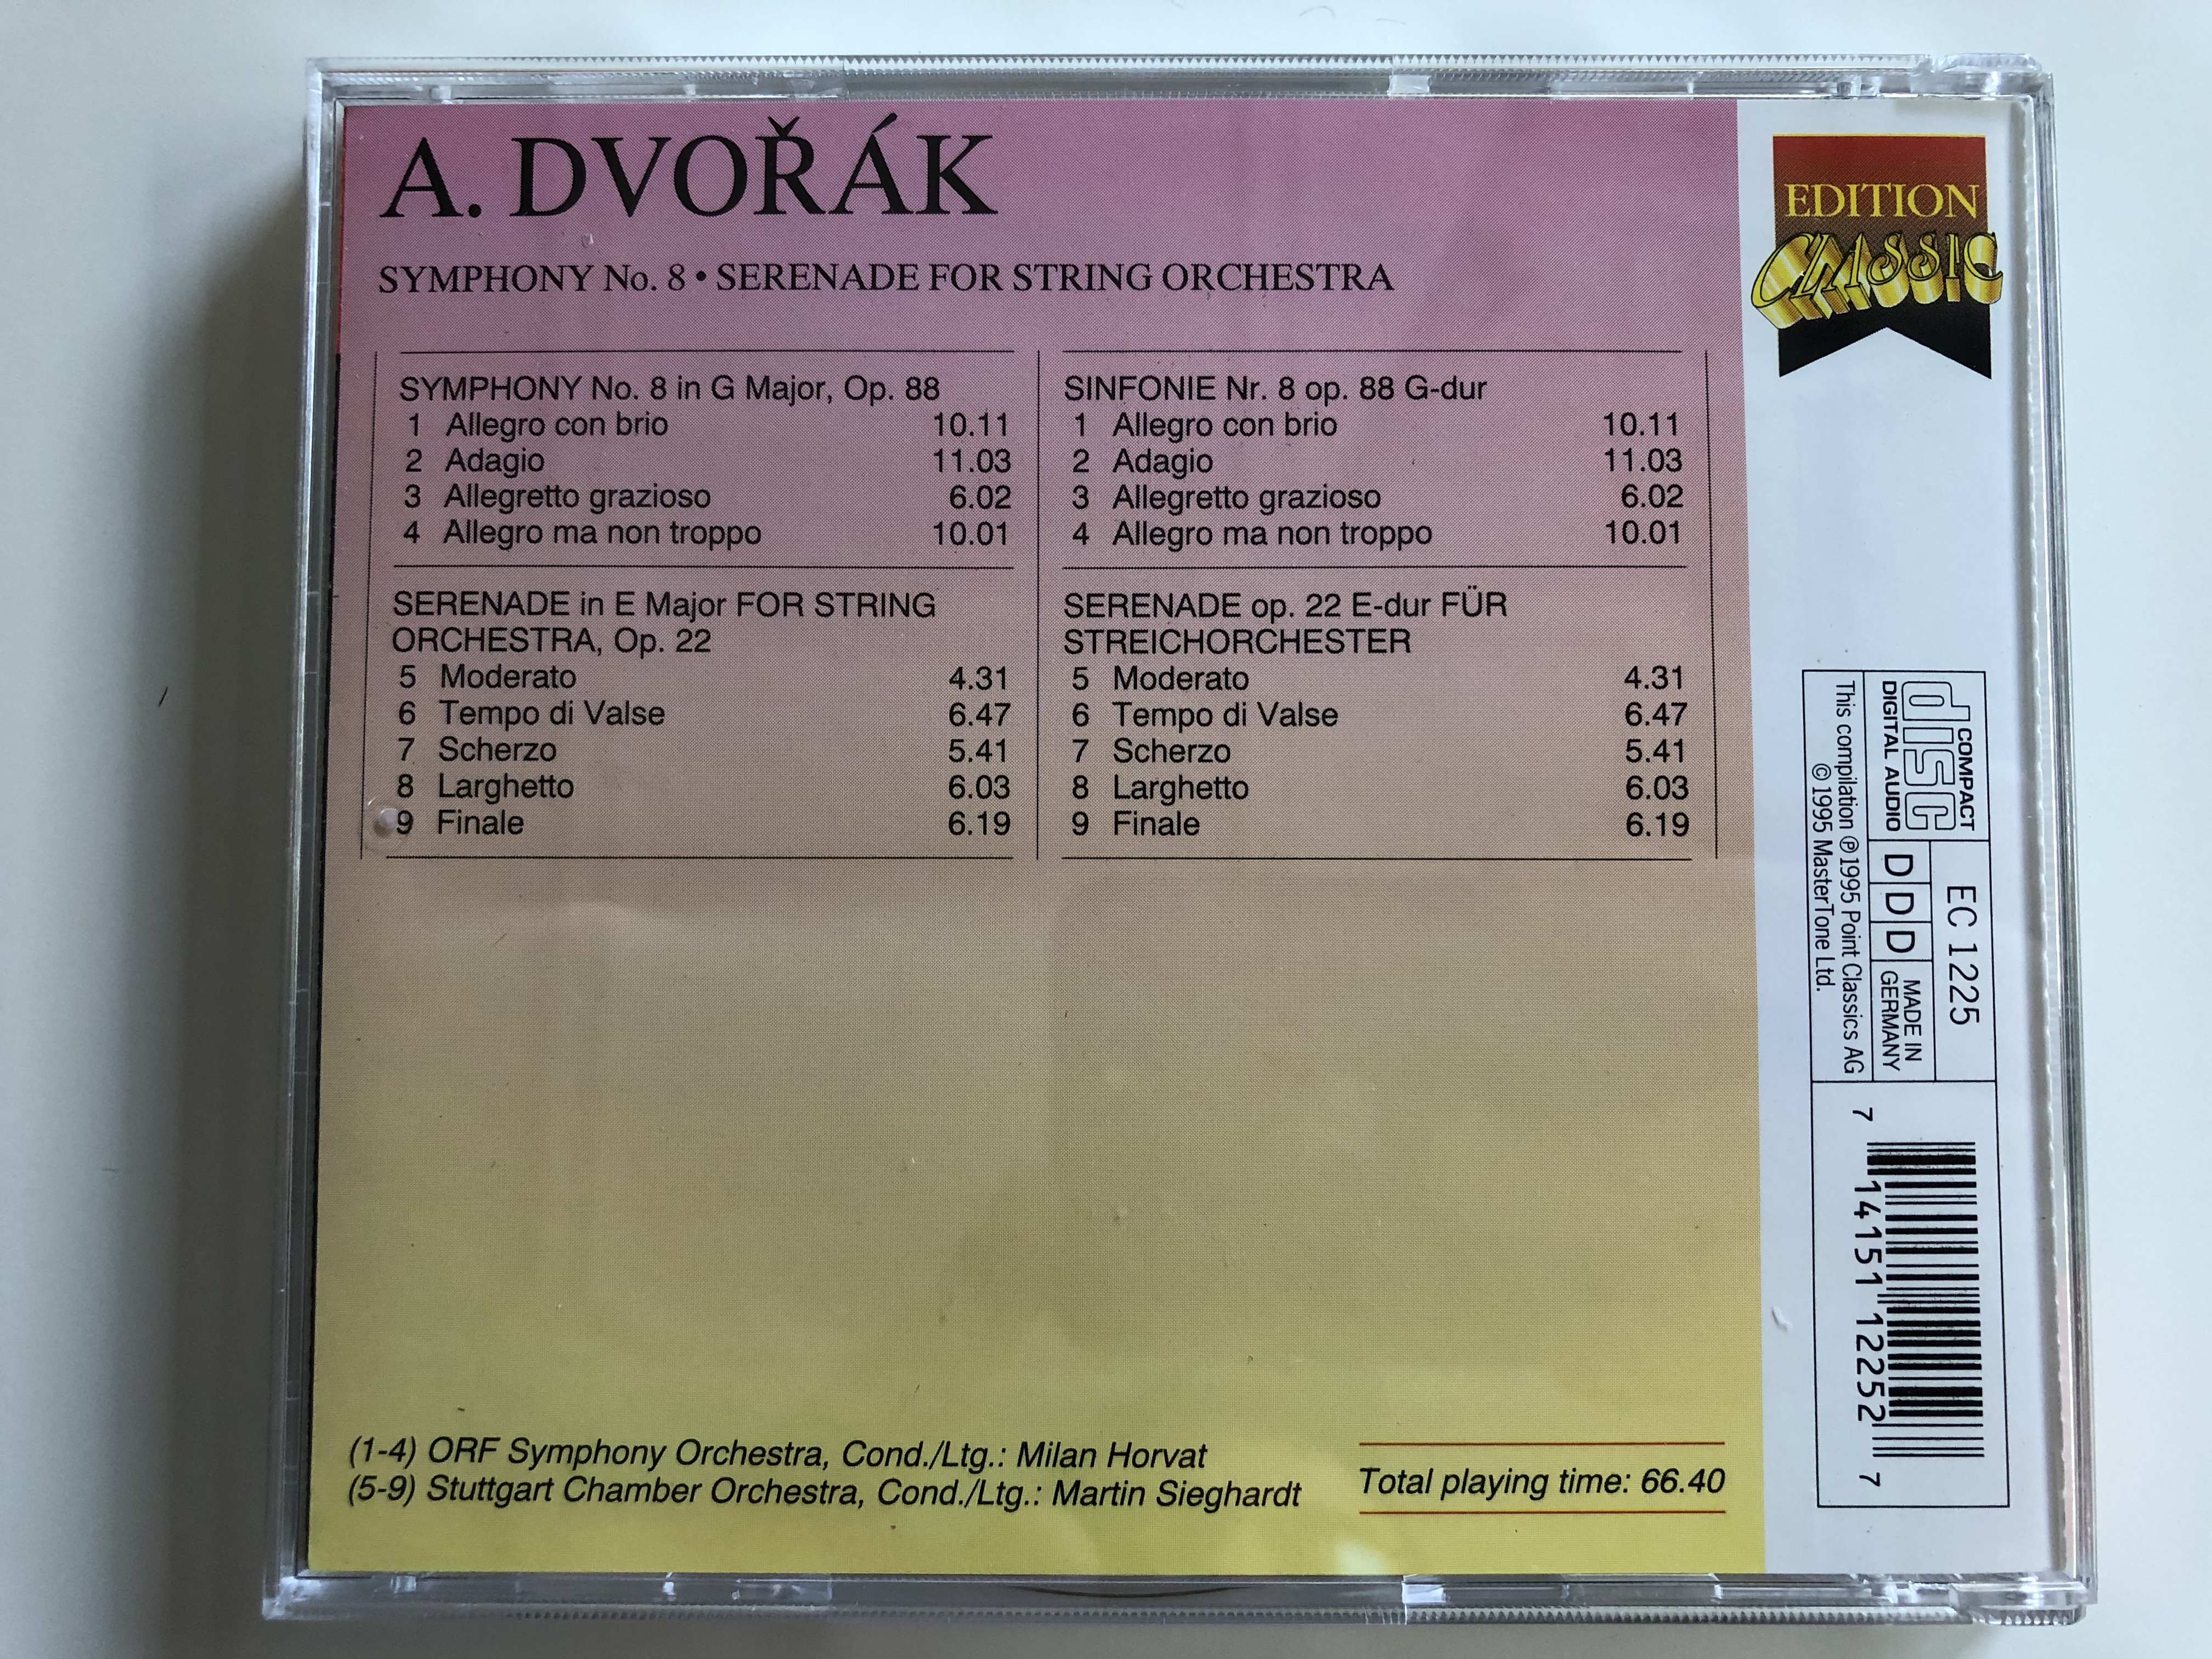 symphony-no.-8-serenade-for-string-orchestra-dvorak-edition-classic-audio-cd-1995-ec-1225-3-.jpg